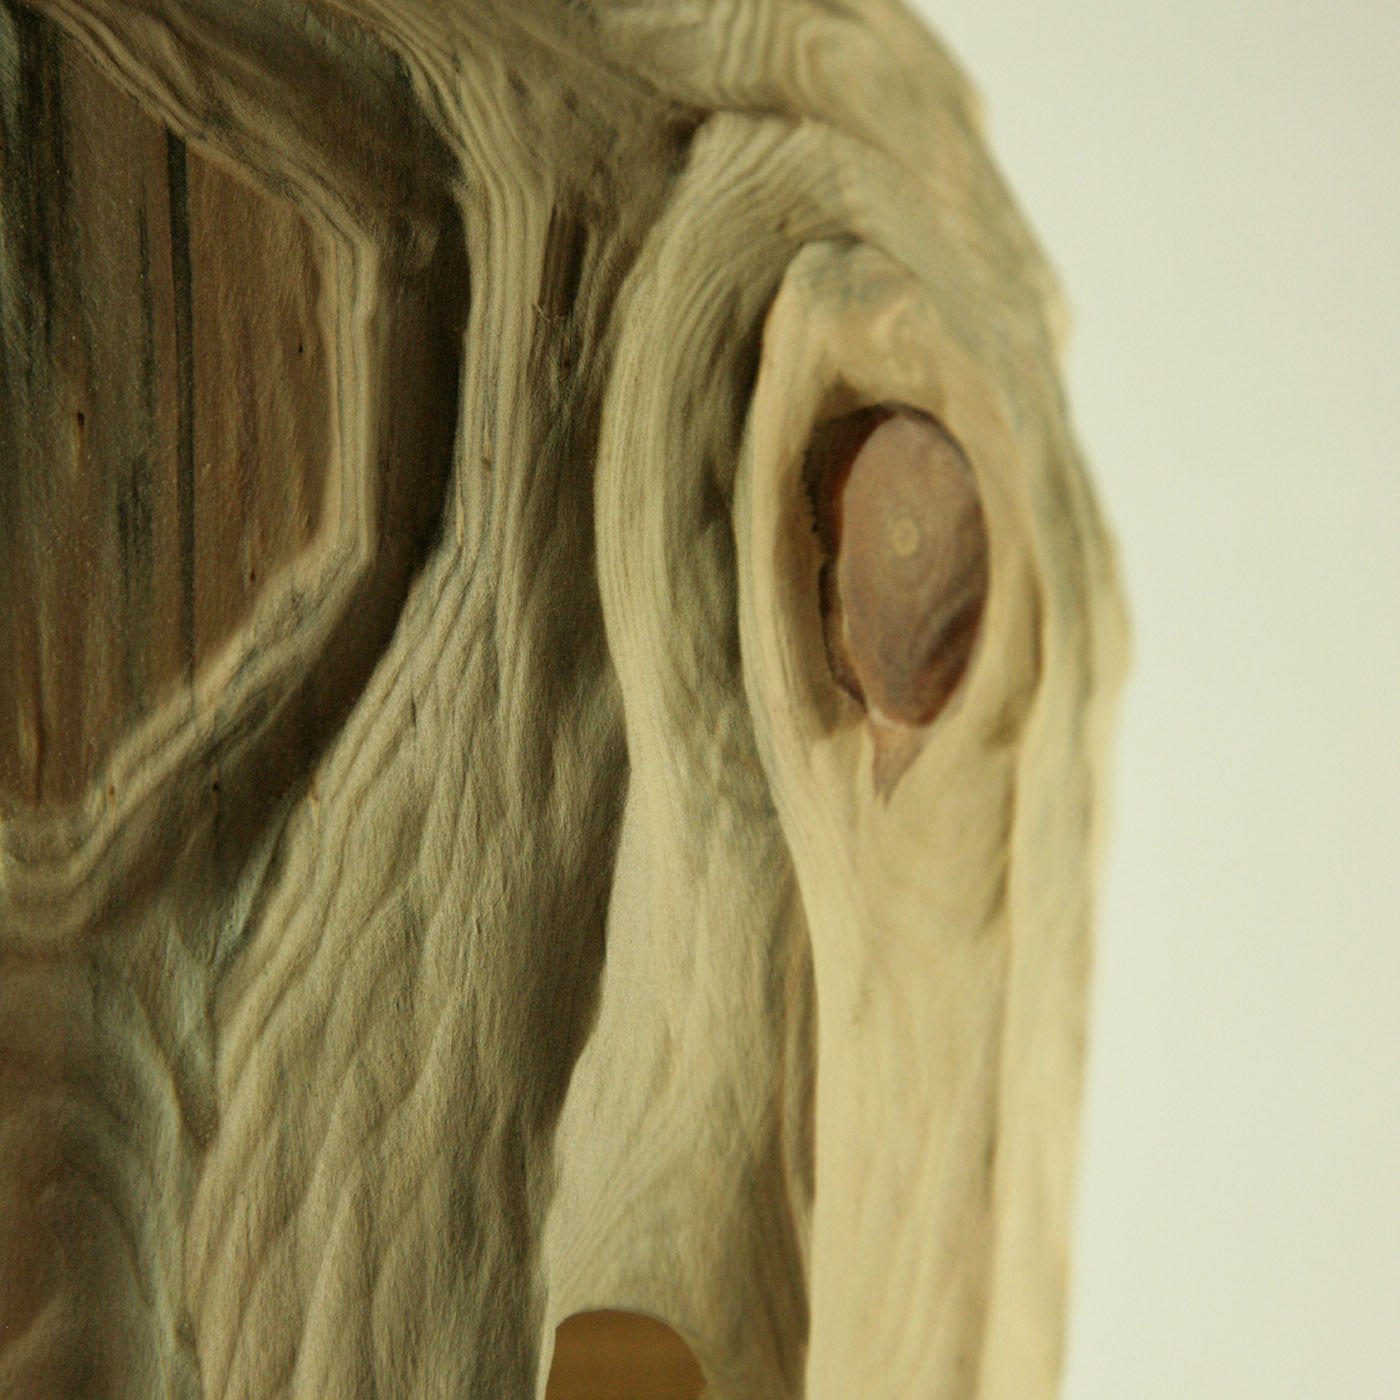 Les Montgolfières Hollow Form Araucaria Sculpture - Alternative view 1